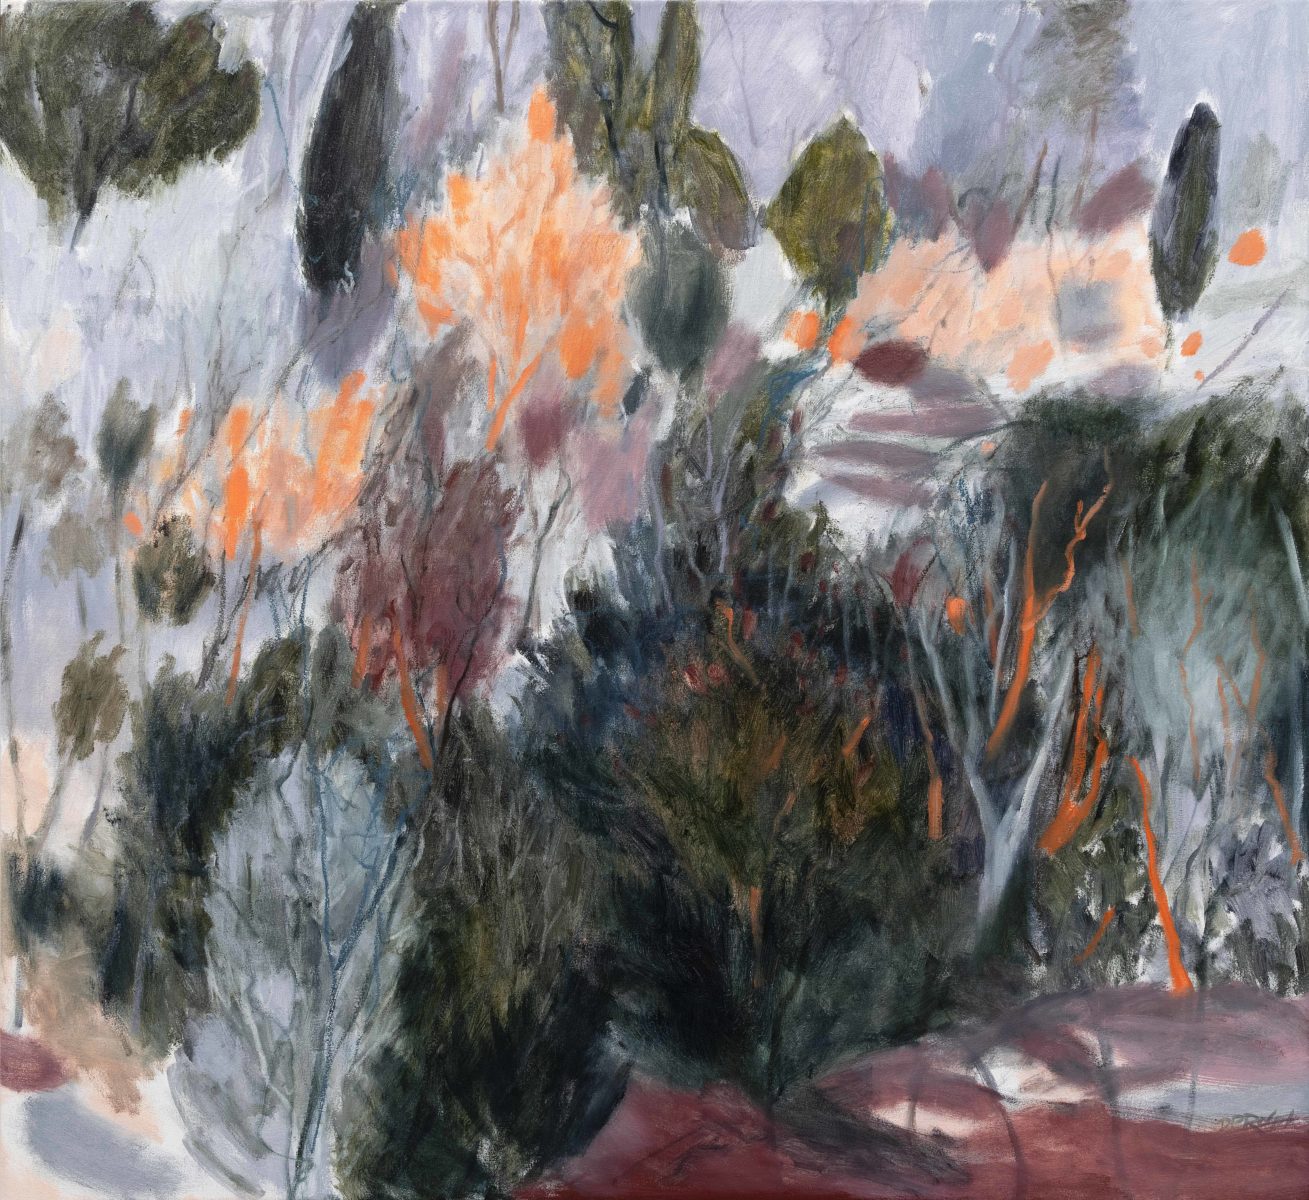 After the Burn - Peregian Beach 2020 | Des Rolph | oil on canvas | 120 x 130 cm | $6500